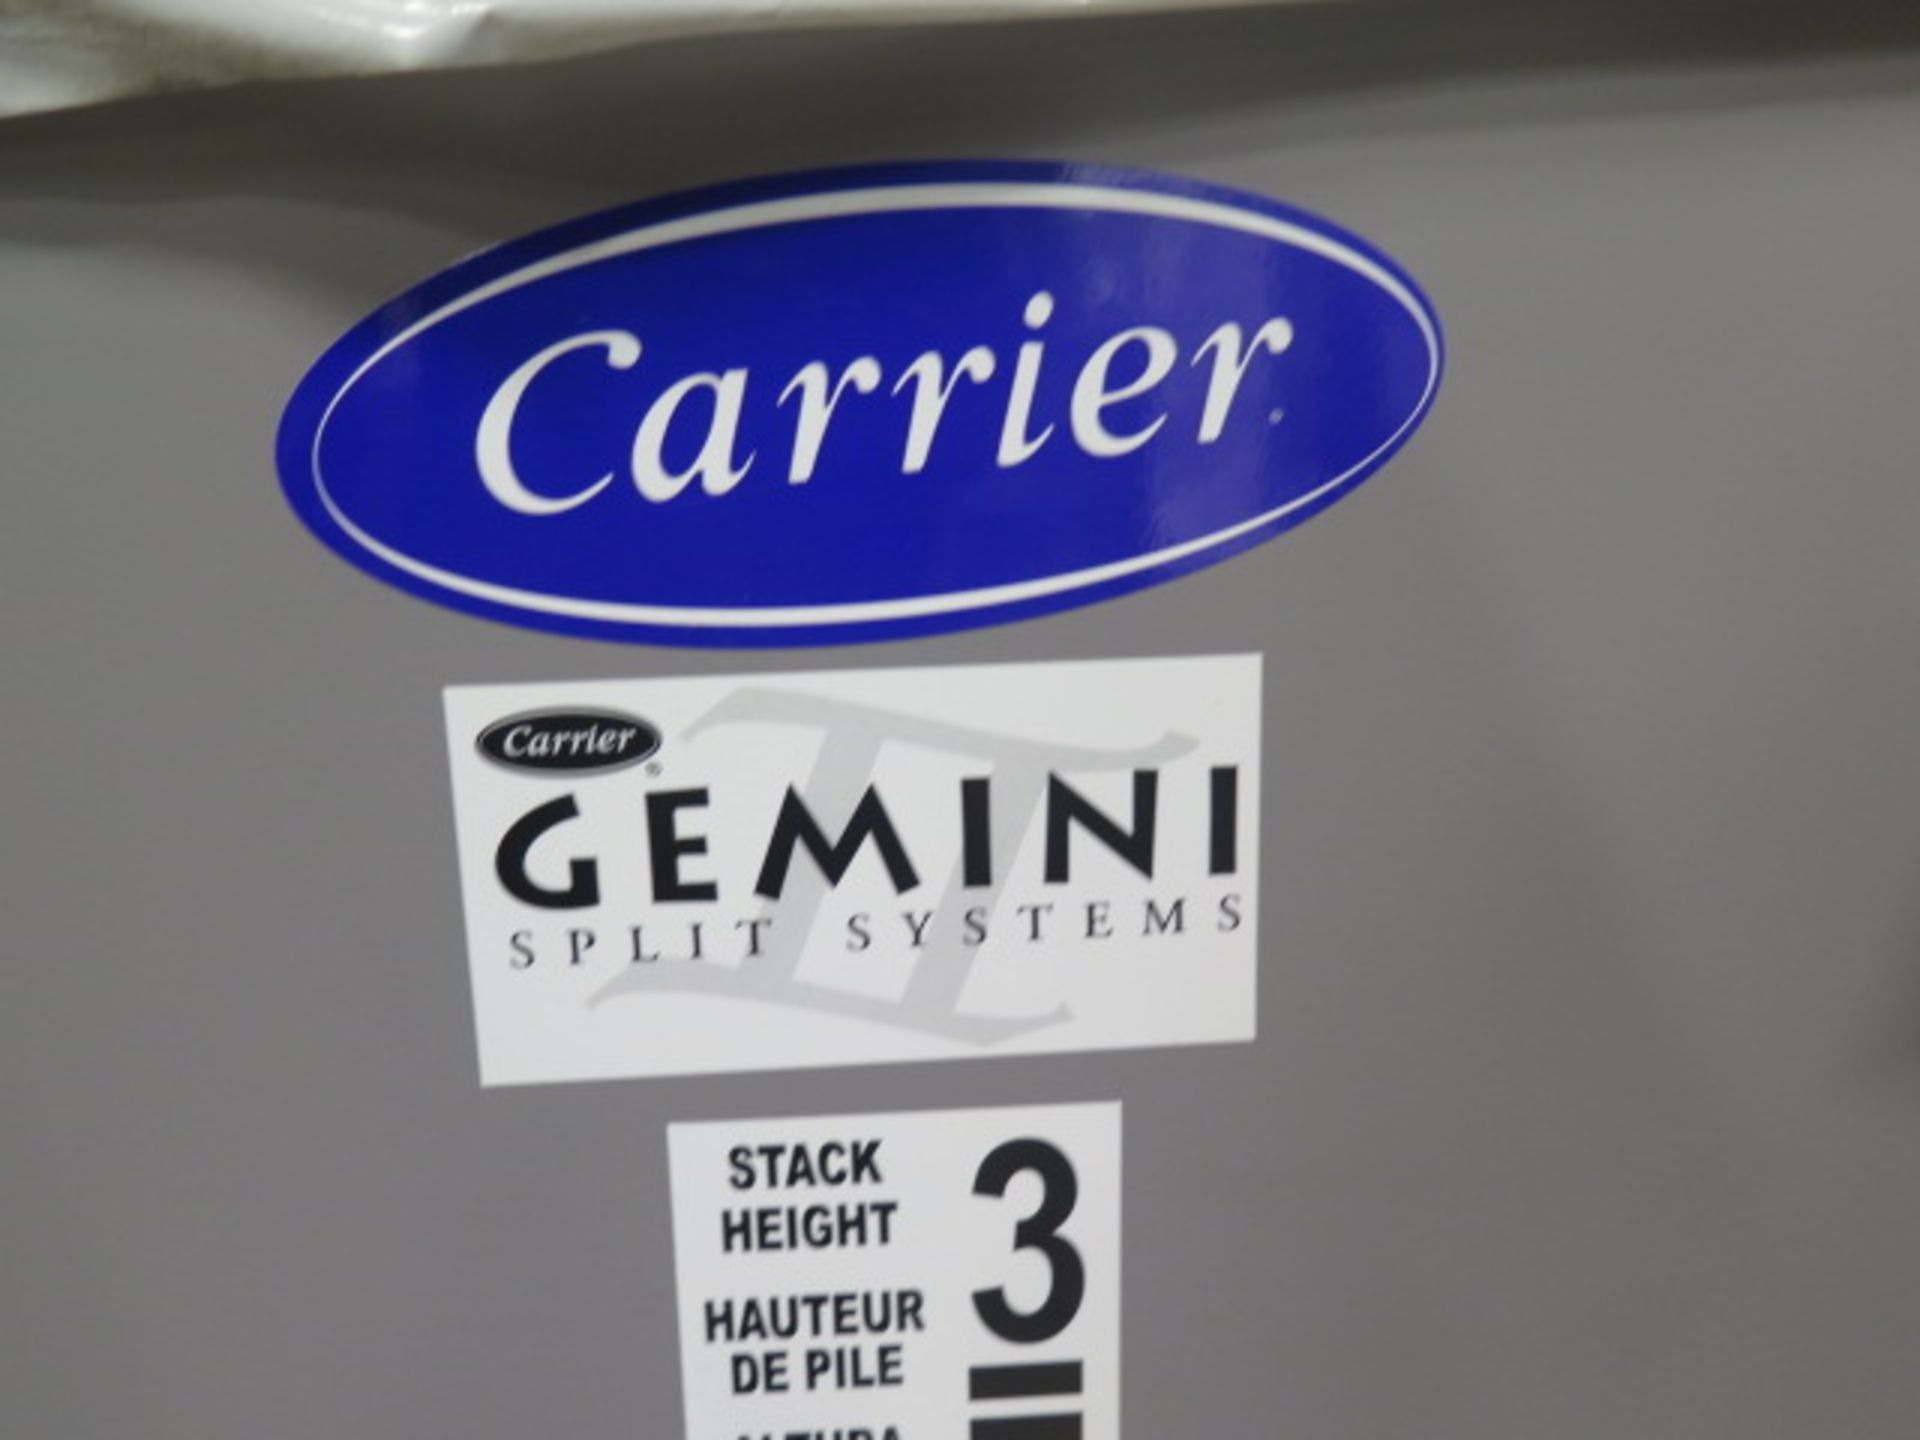 Carrier “Gemini Split Systems” 38AUQB08A0A6-0A0C0 7.5 Ton Dual Voltage Heat Pump Air Conditioners, - Image 5 of 9